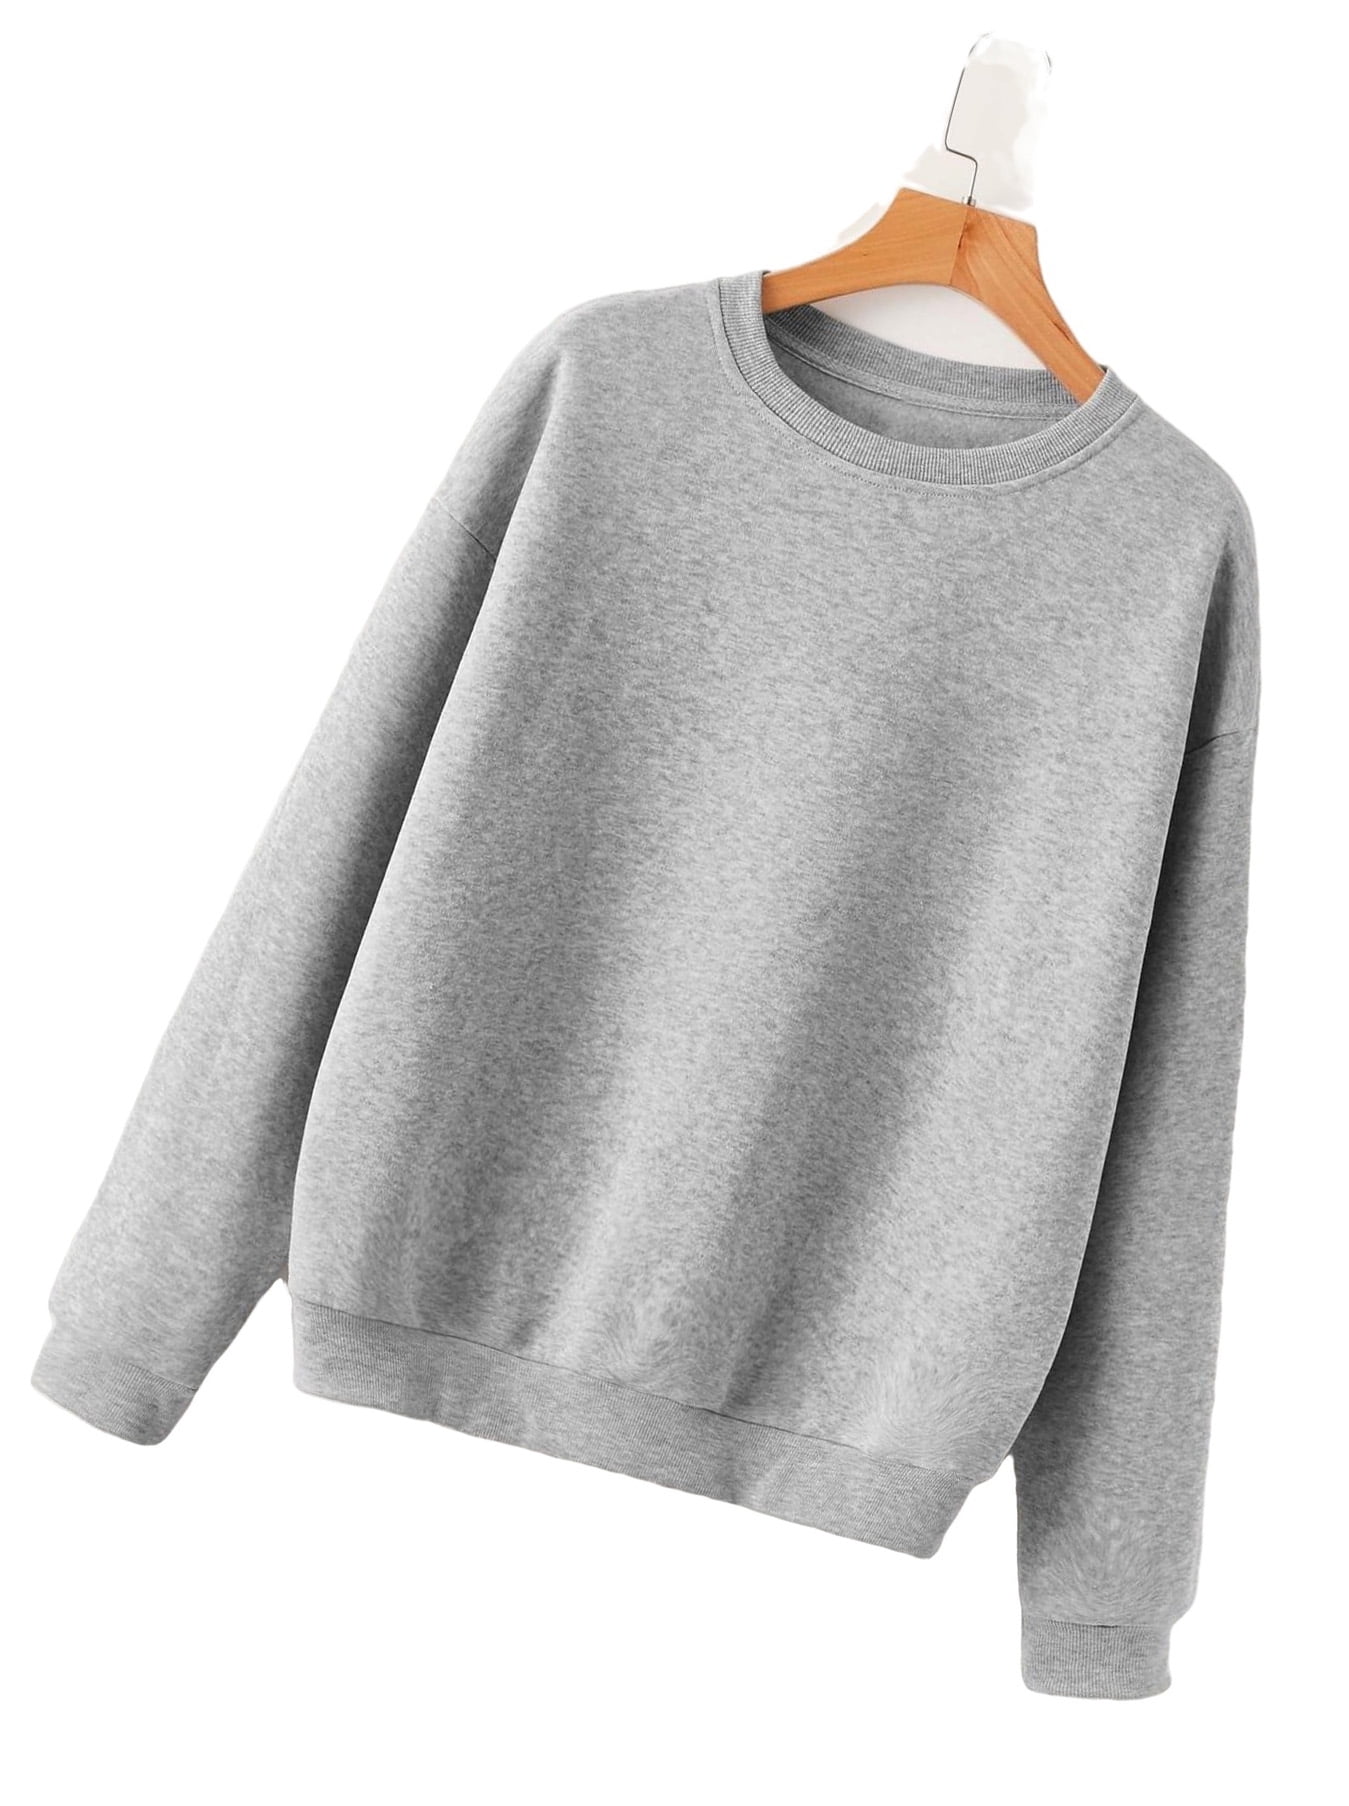 Casual Plain Round Neck Pullovers Long Sleeve Grey Women Sweatshirts ...